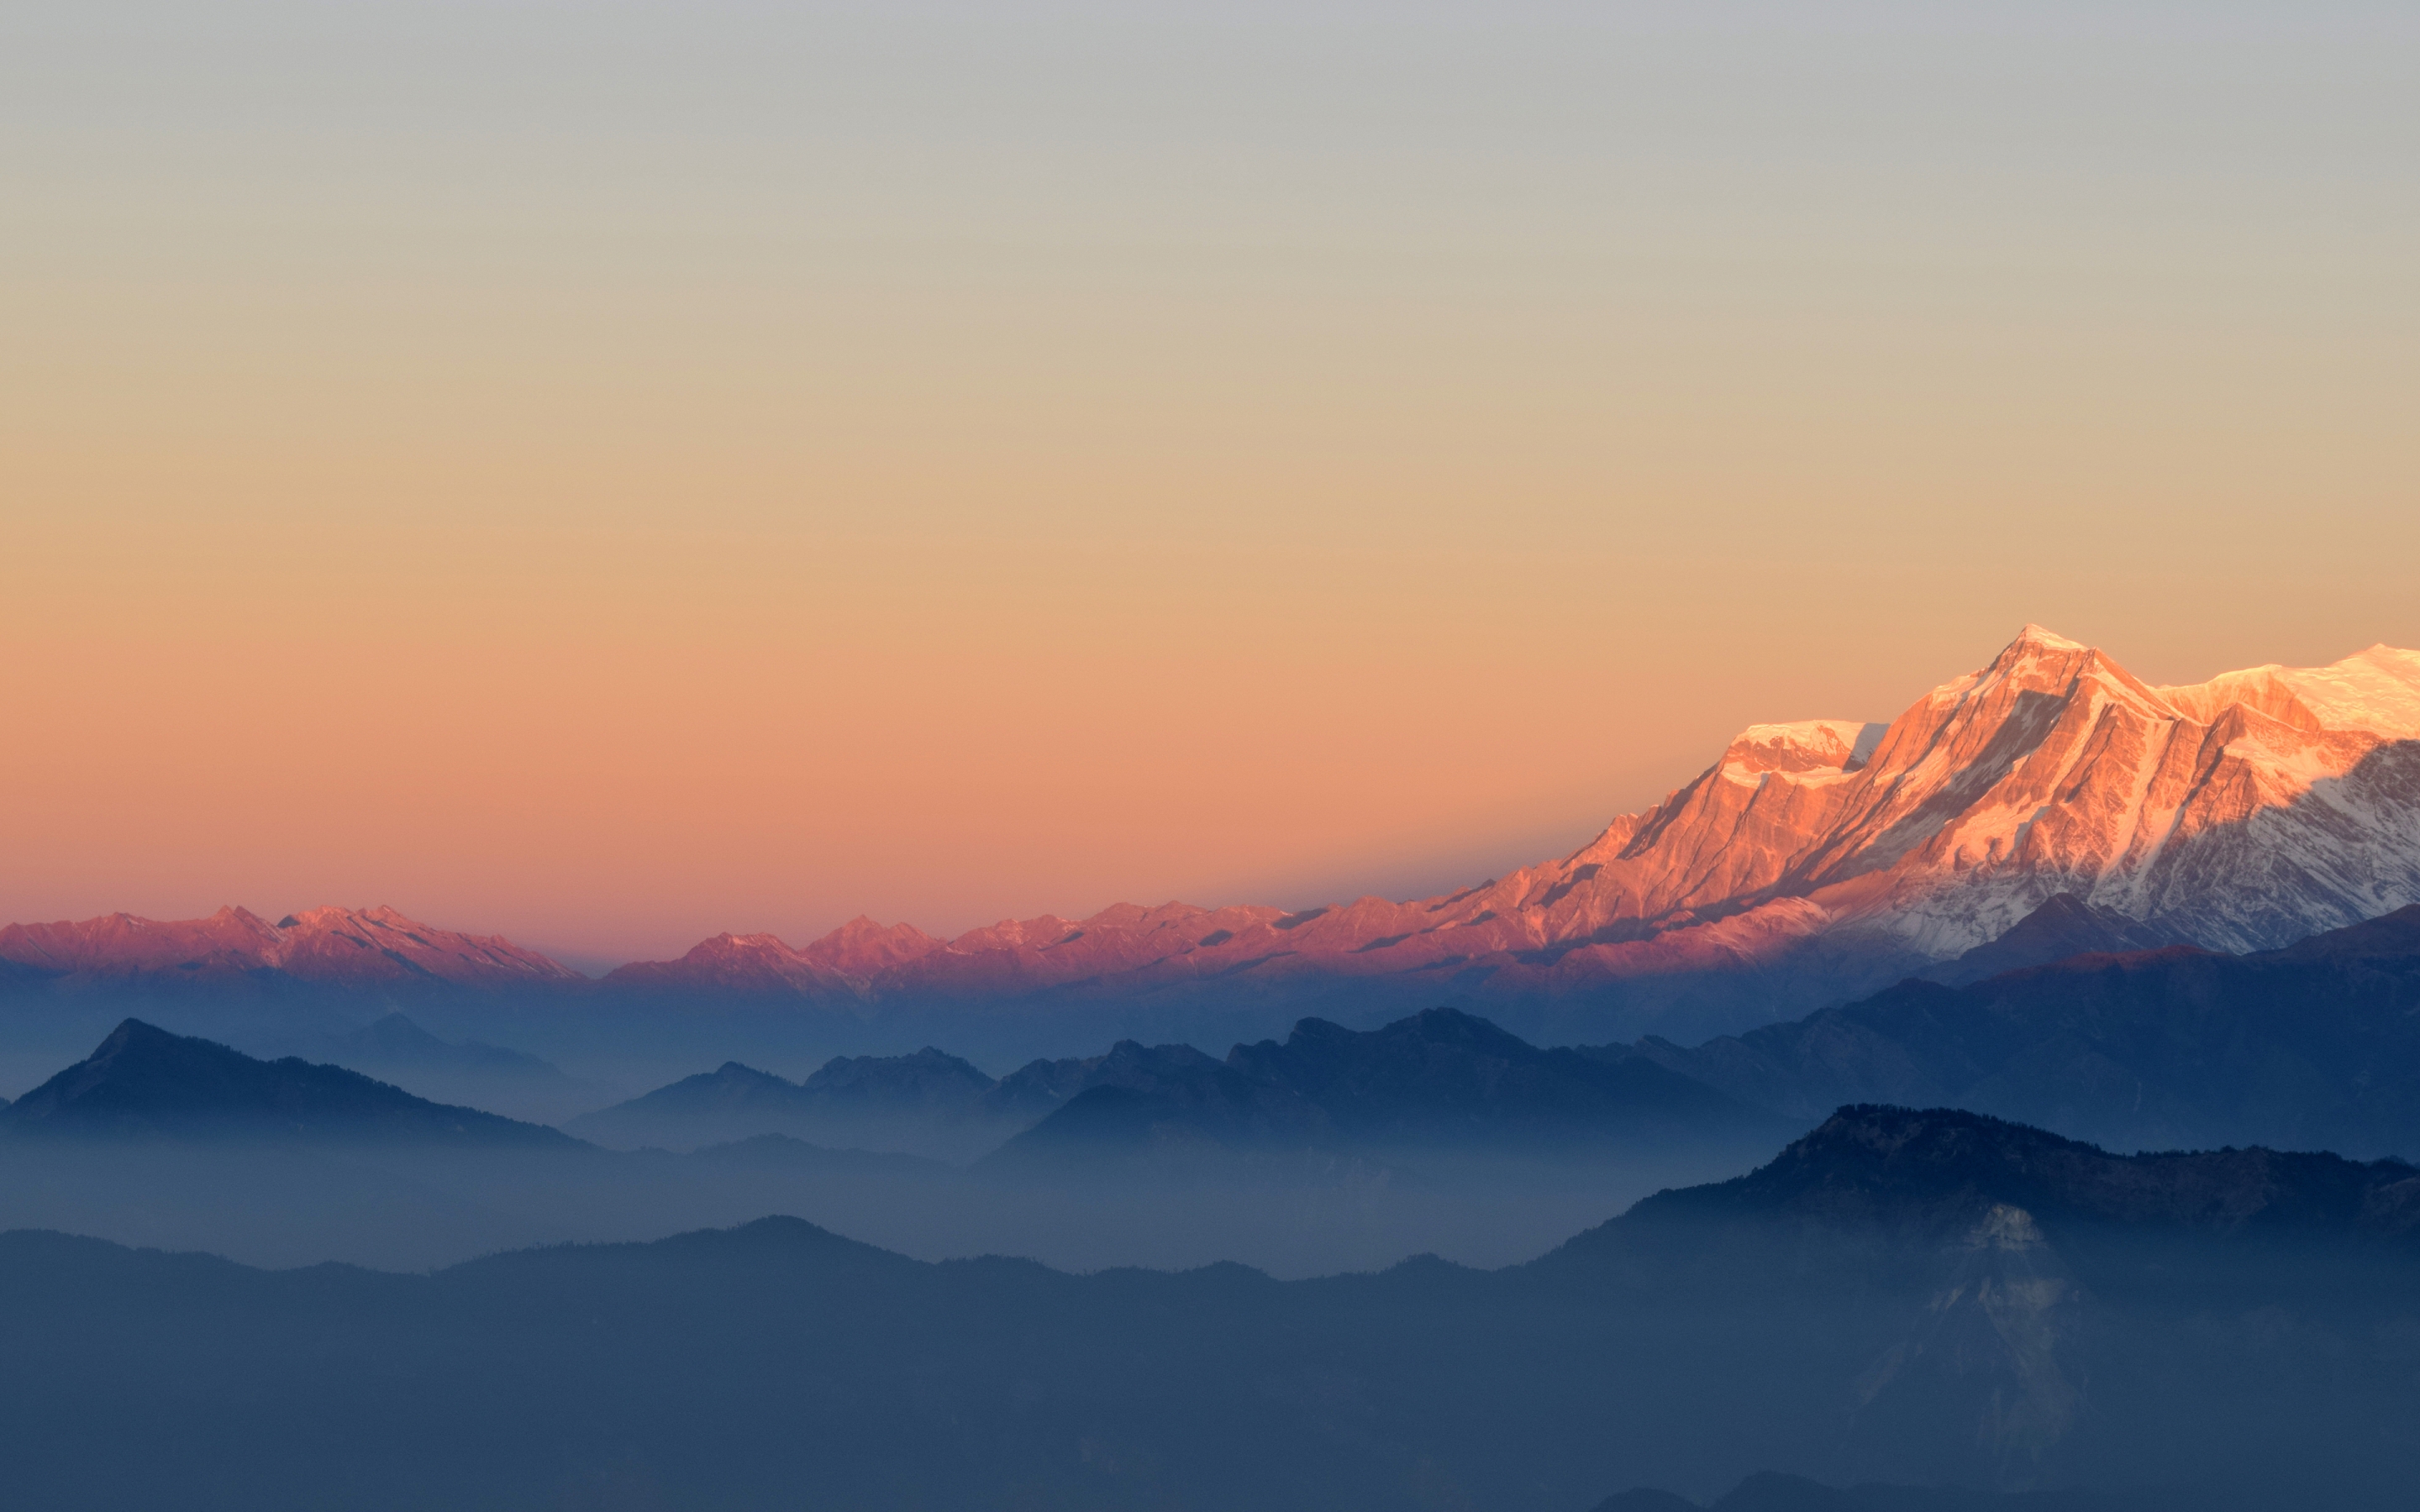 Minimal Mountains Tops for 2880 x 1800 Retina Display resolution